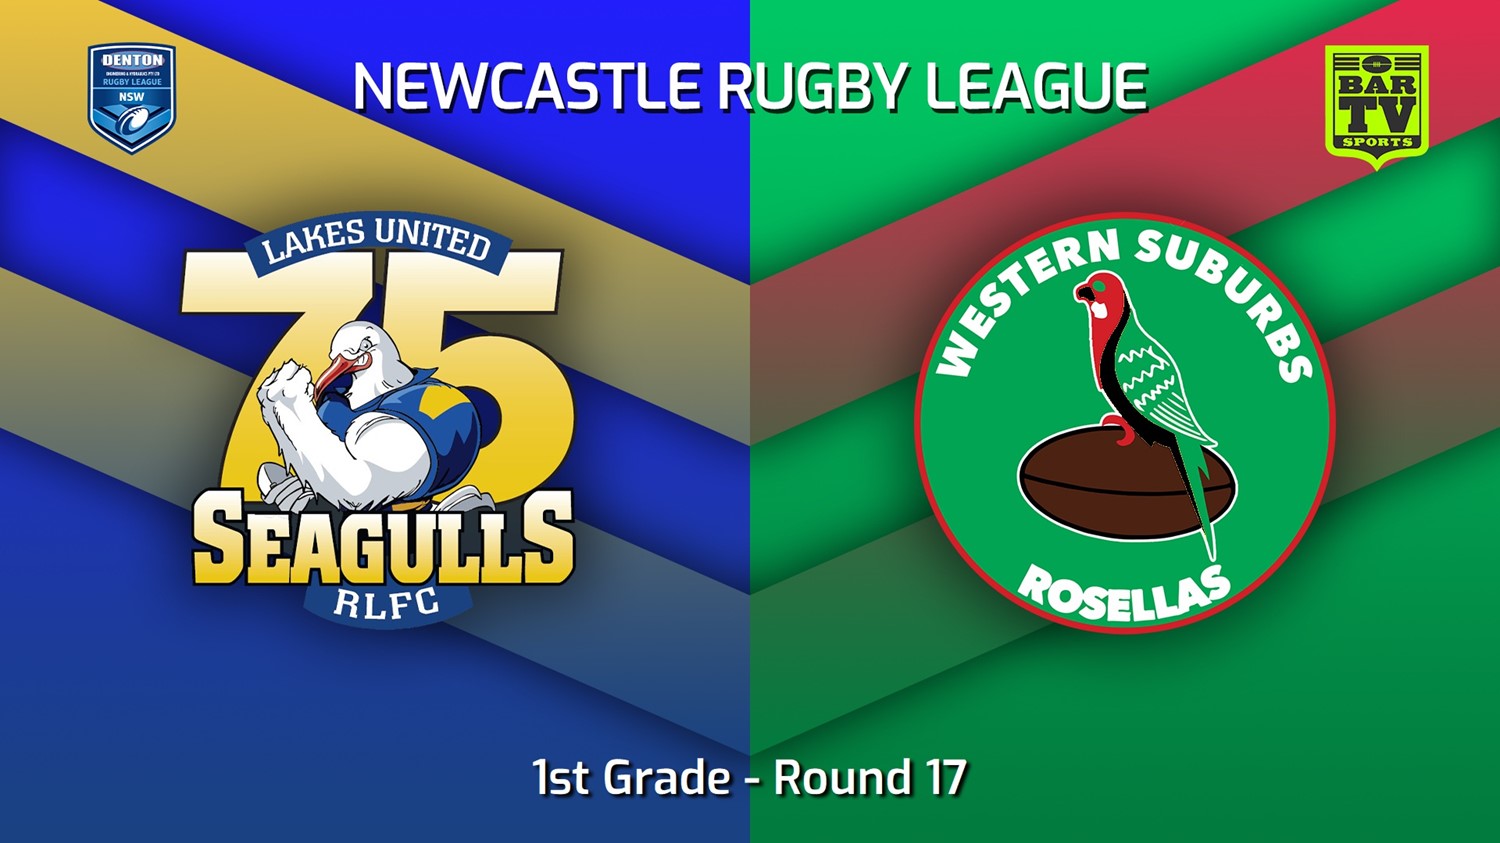 220730-Newcastle Round 17 - 1st Grade - Lakes United v Western Suburbs Rosellas Slate Image